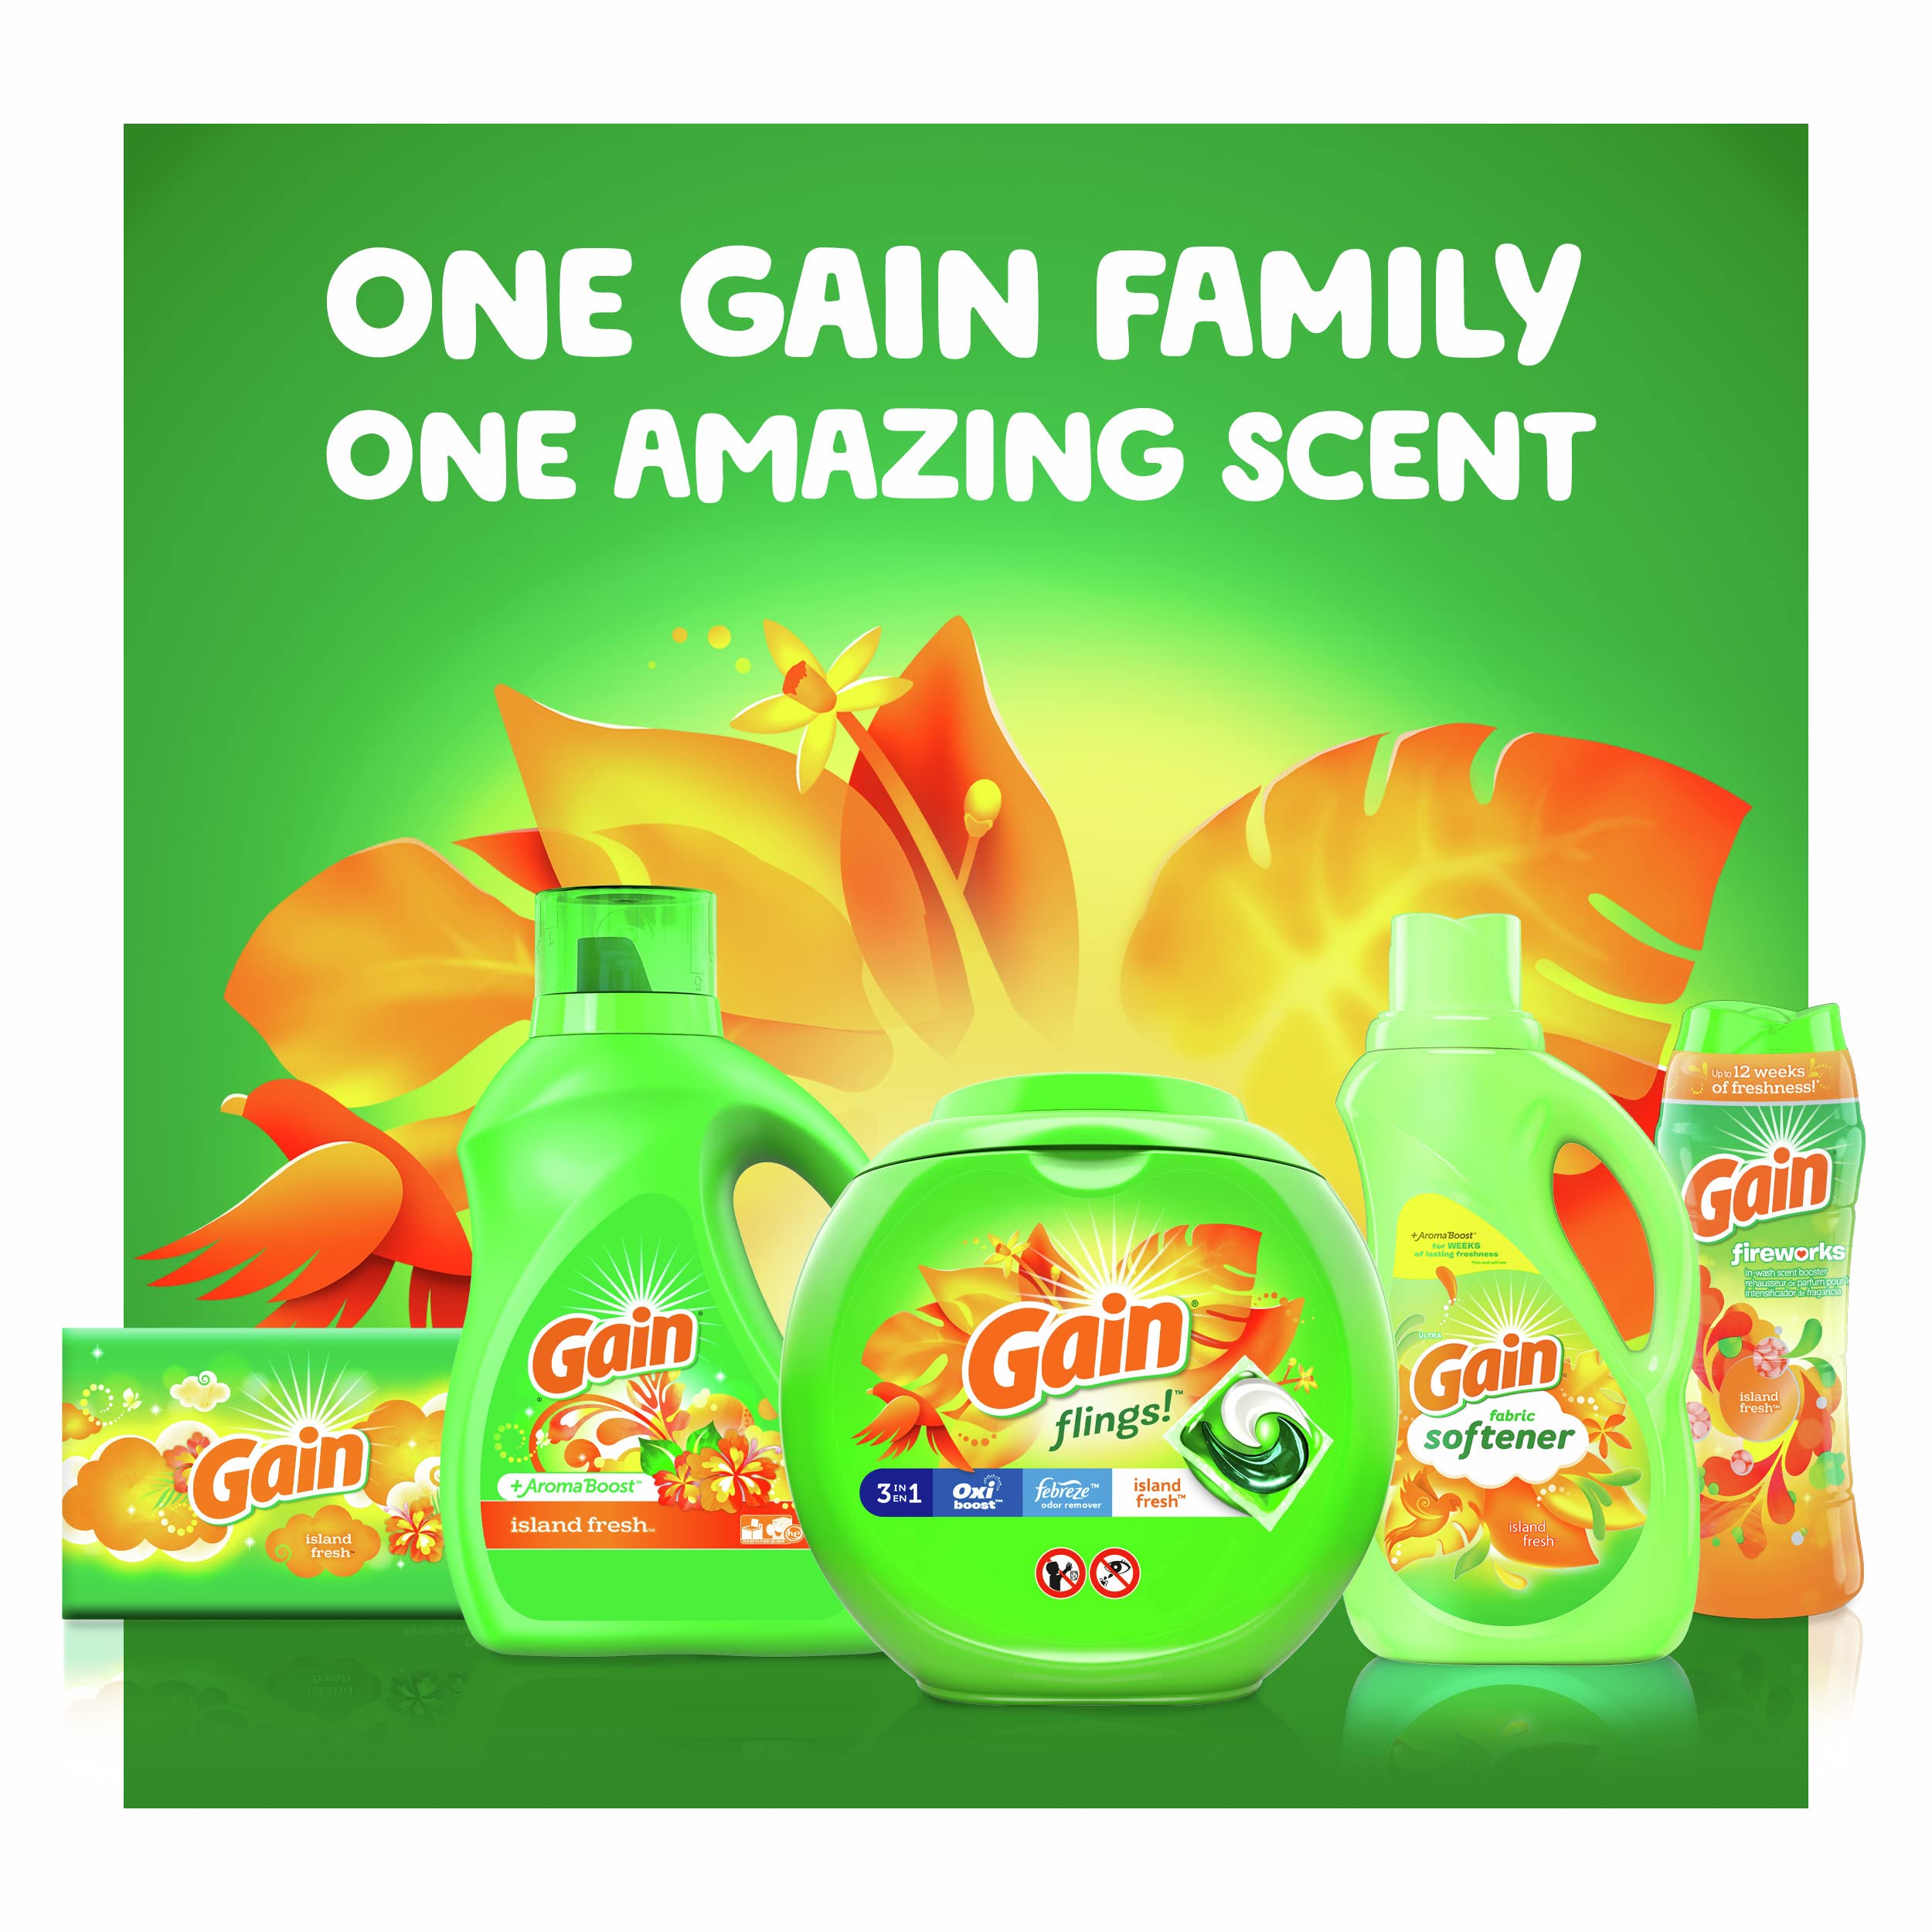 Gain + Aroma Boost Laundry Detergent Liquid Soap, Island Fresh Scent, 45 Loads, 65 Fl Oz, He Compatible